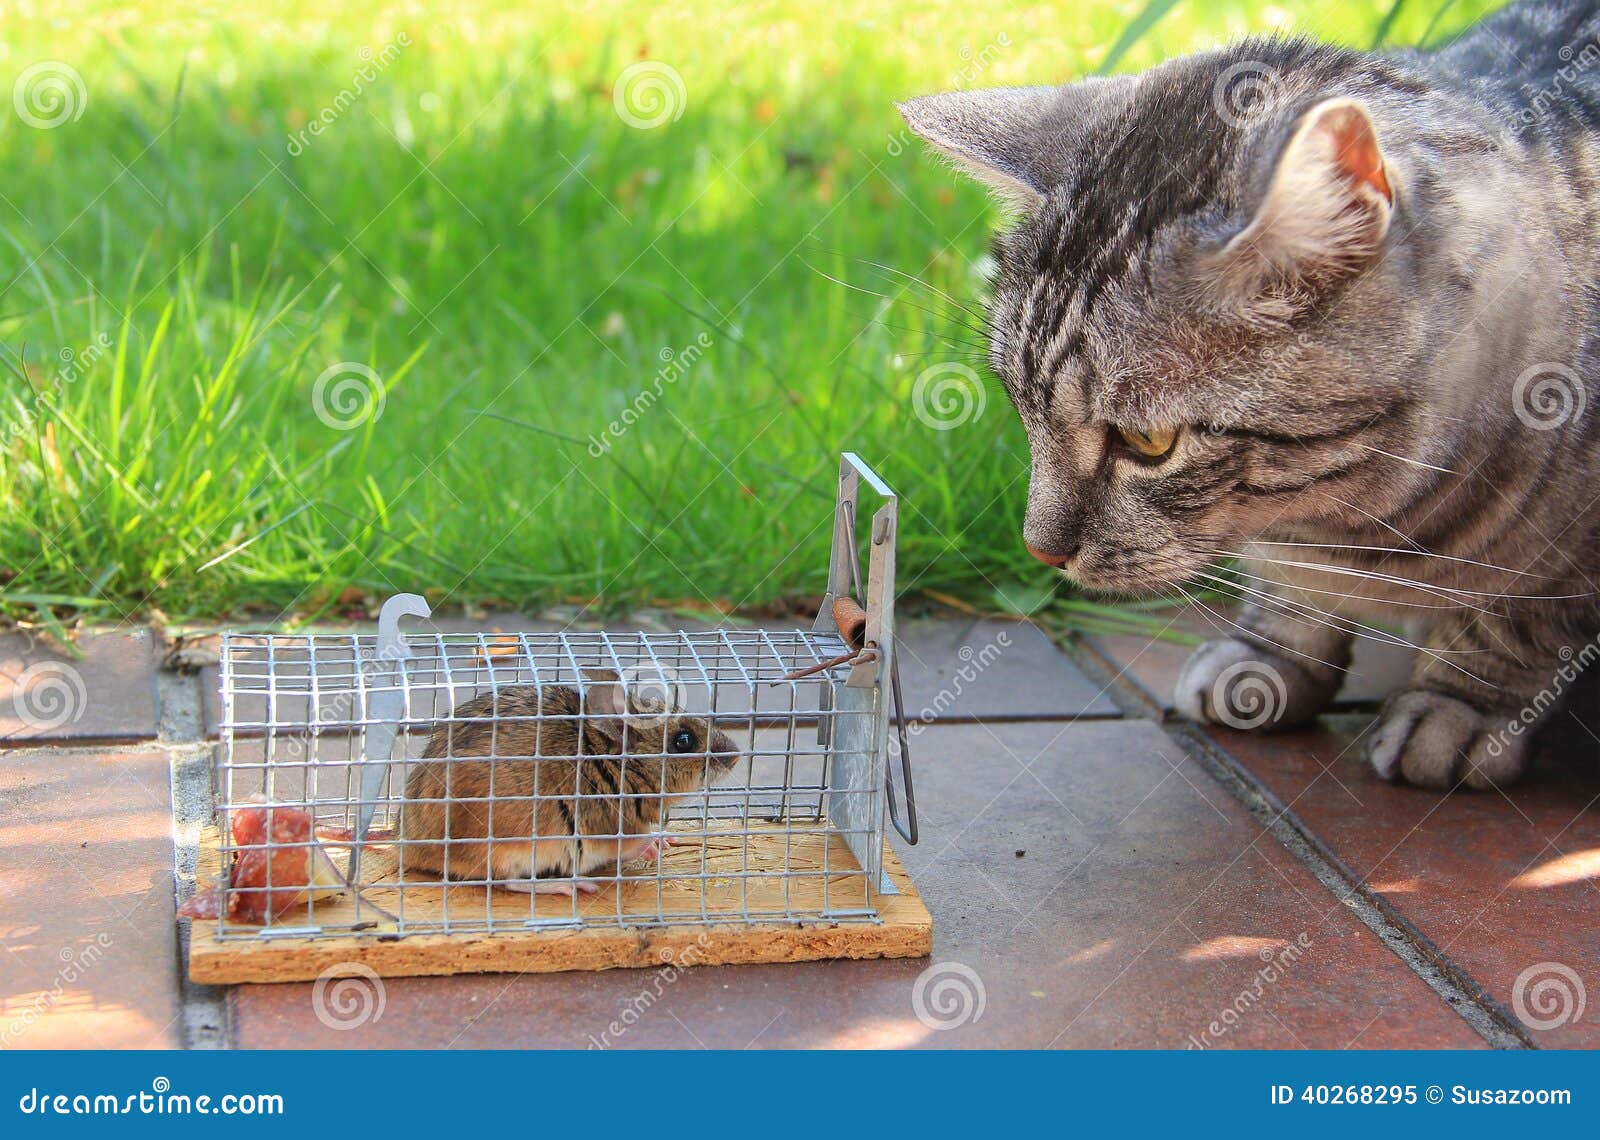 https://thumbs.dreamstime.com/z/cat-captured-mouse-garden-live-trap-40268295.jpg